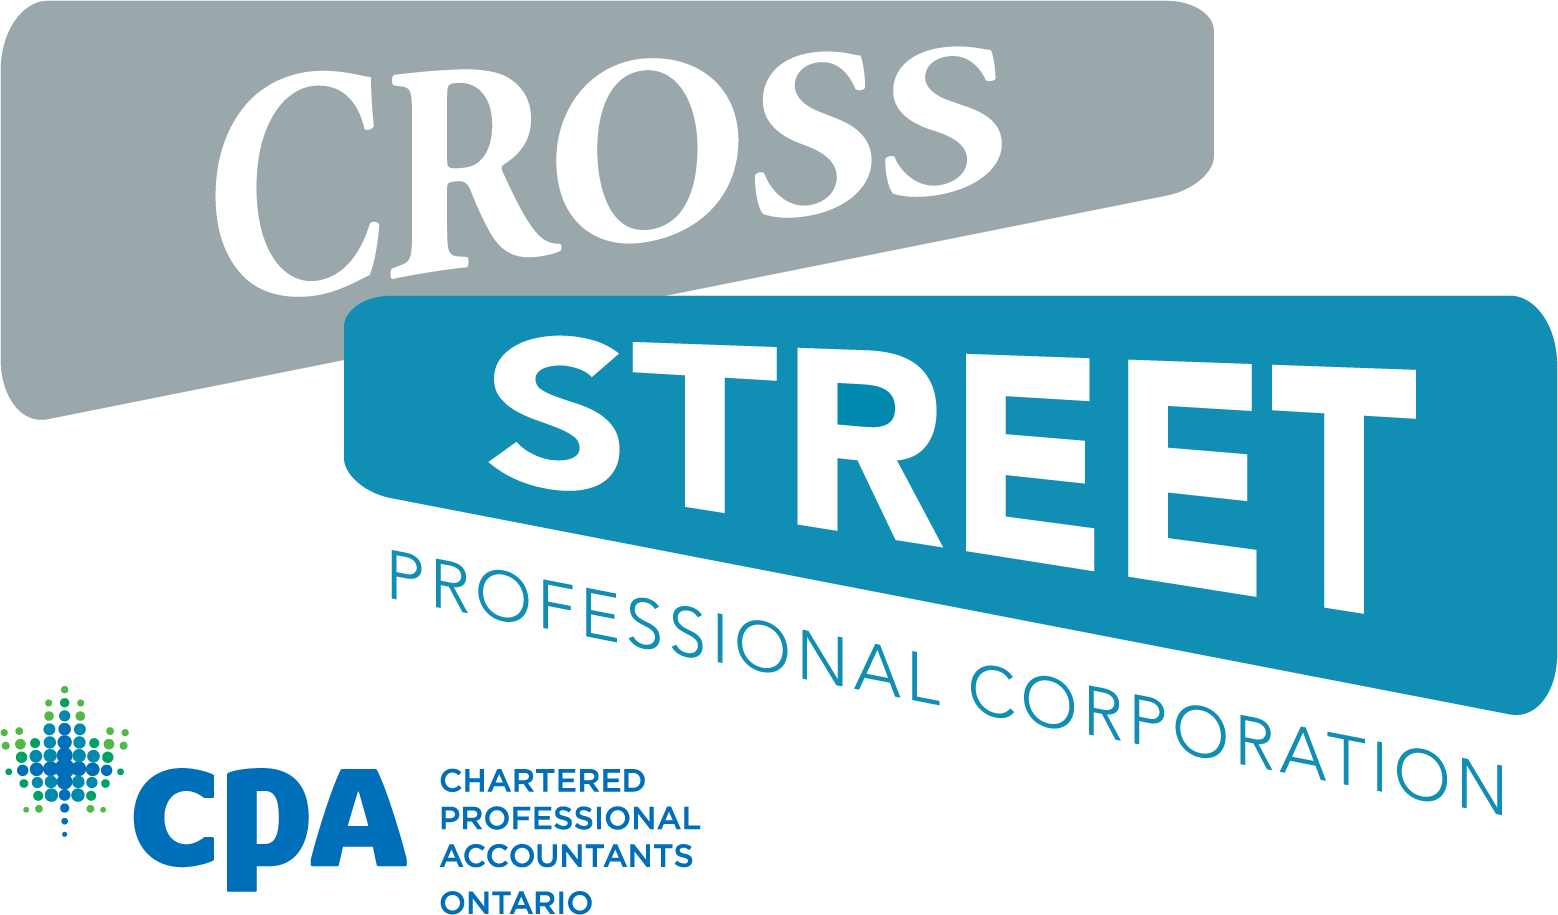 Cross Street Professional Corp